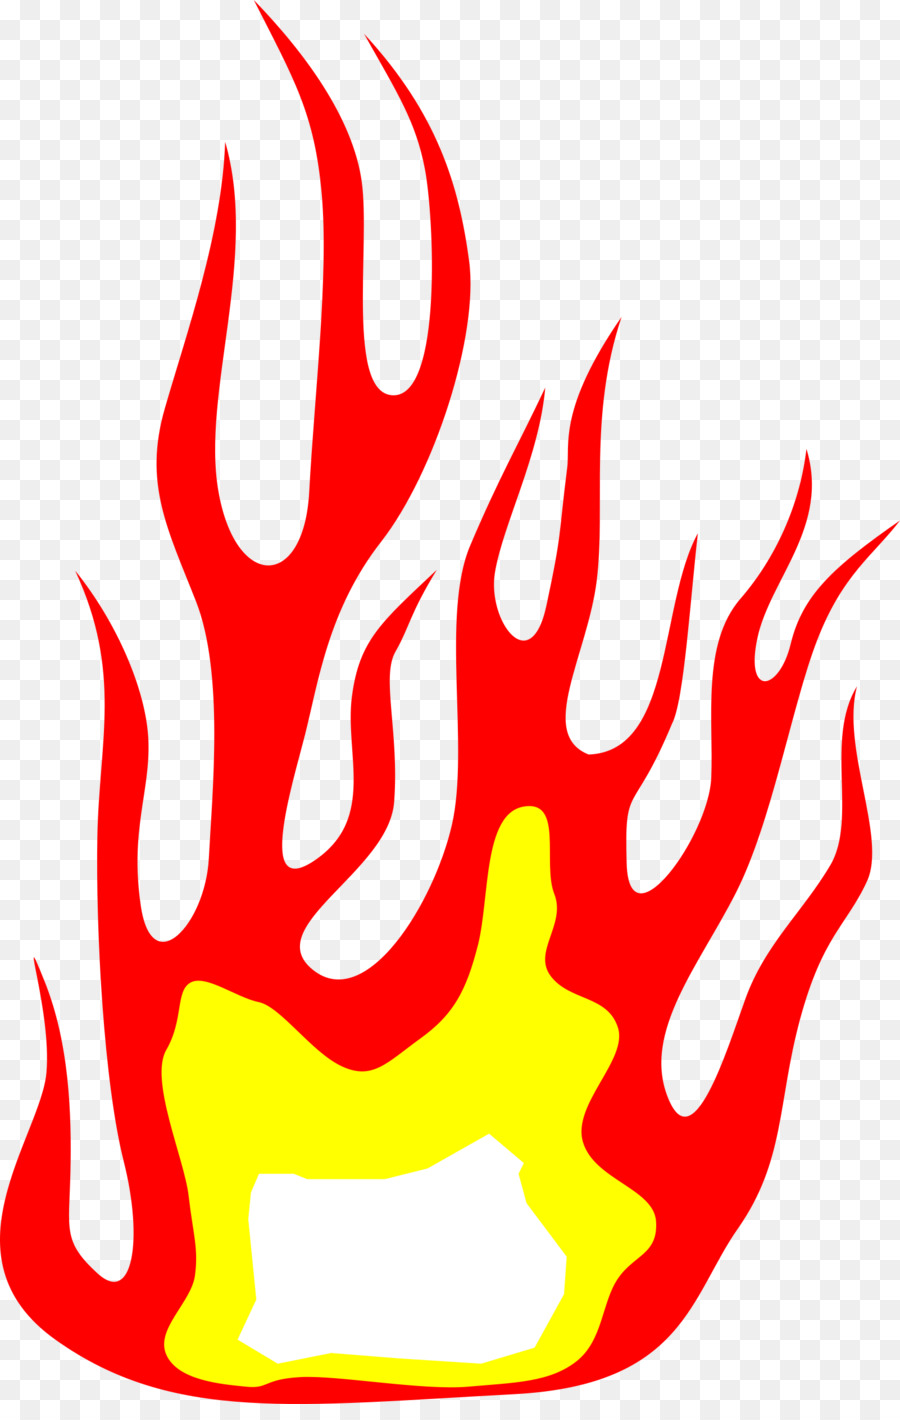 Flame Cartoon Png Download 1602 2500 Free Transparent Flame